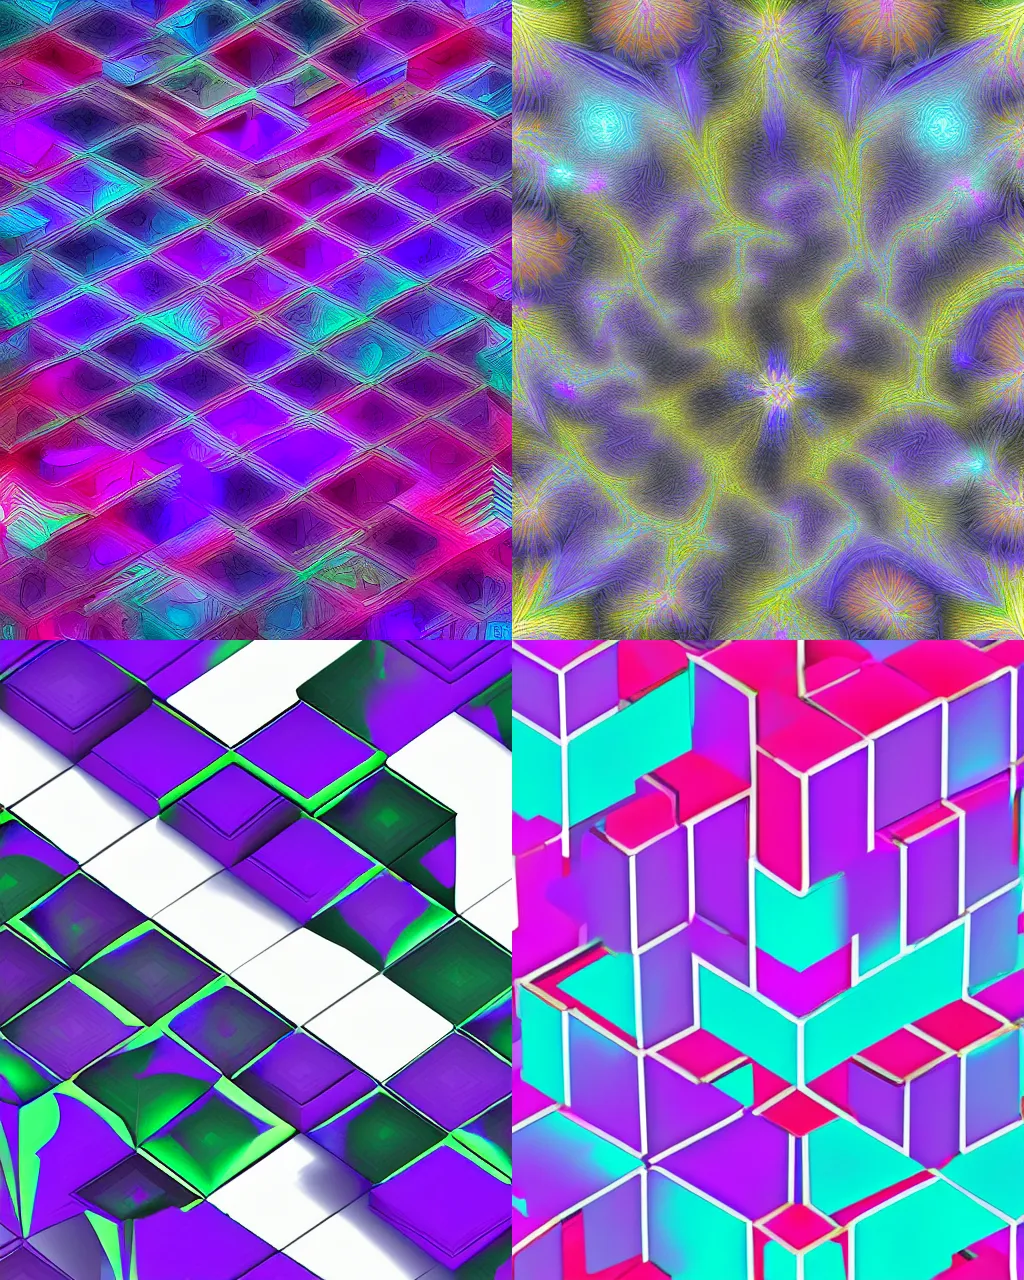 Prompt: digital art of fractal cubes